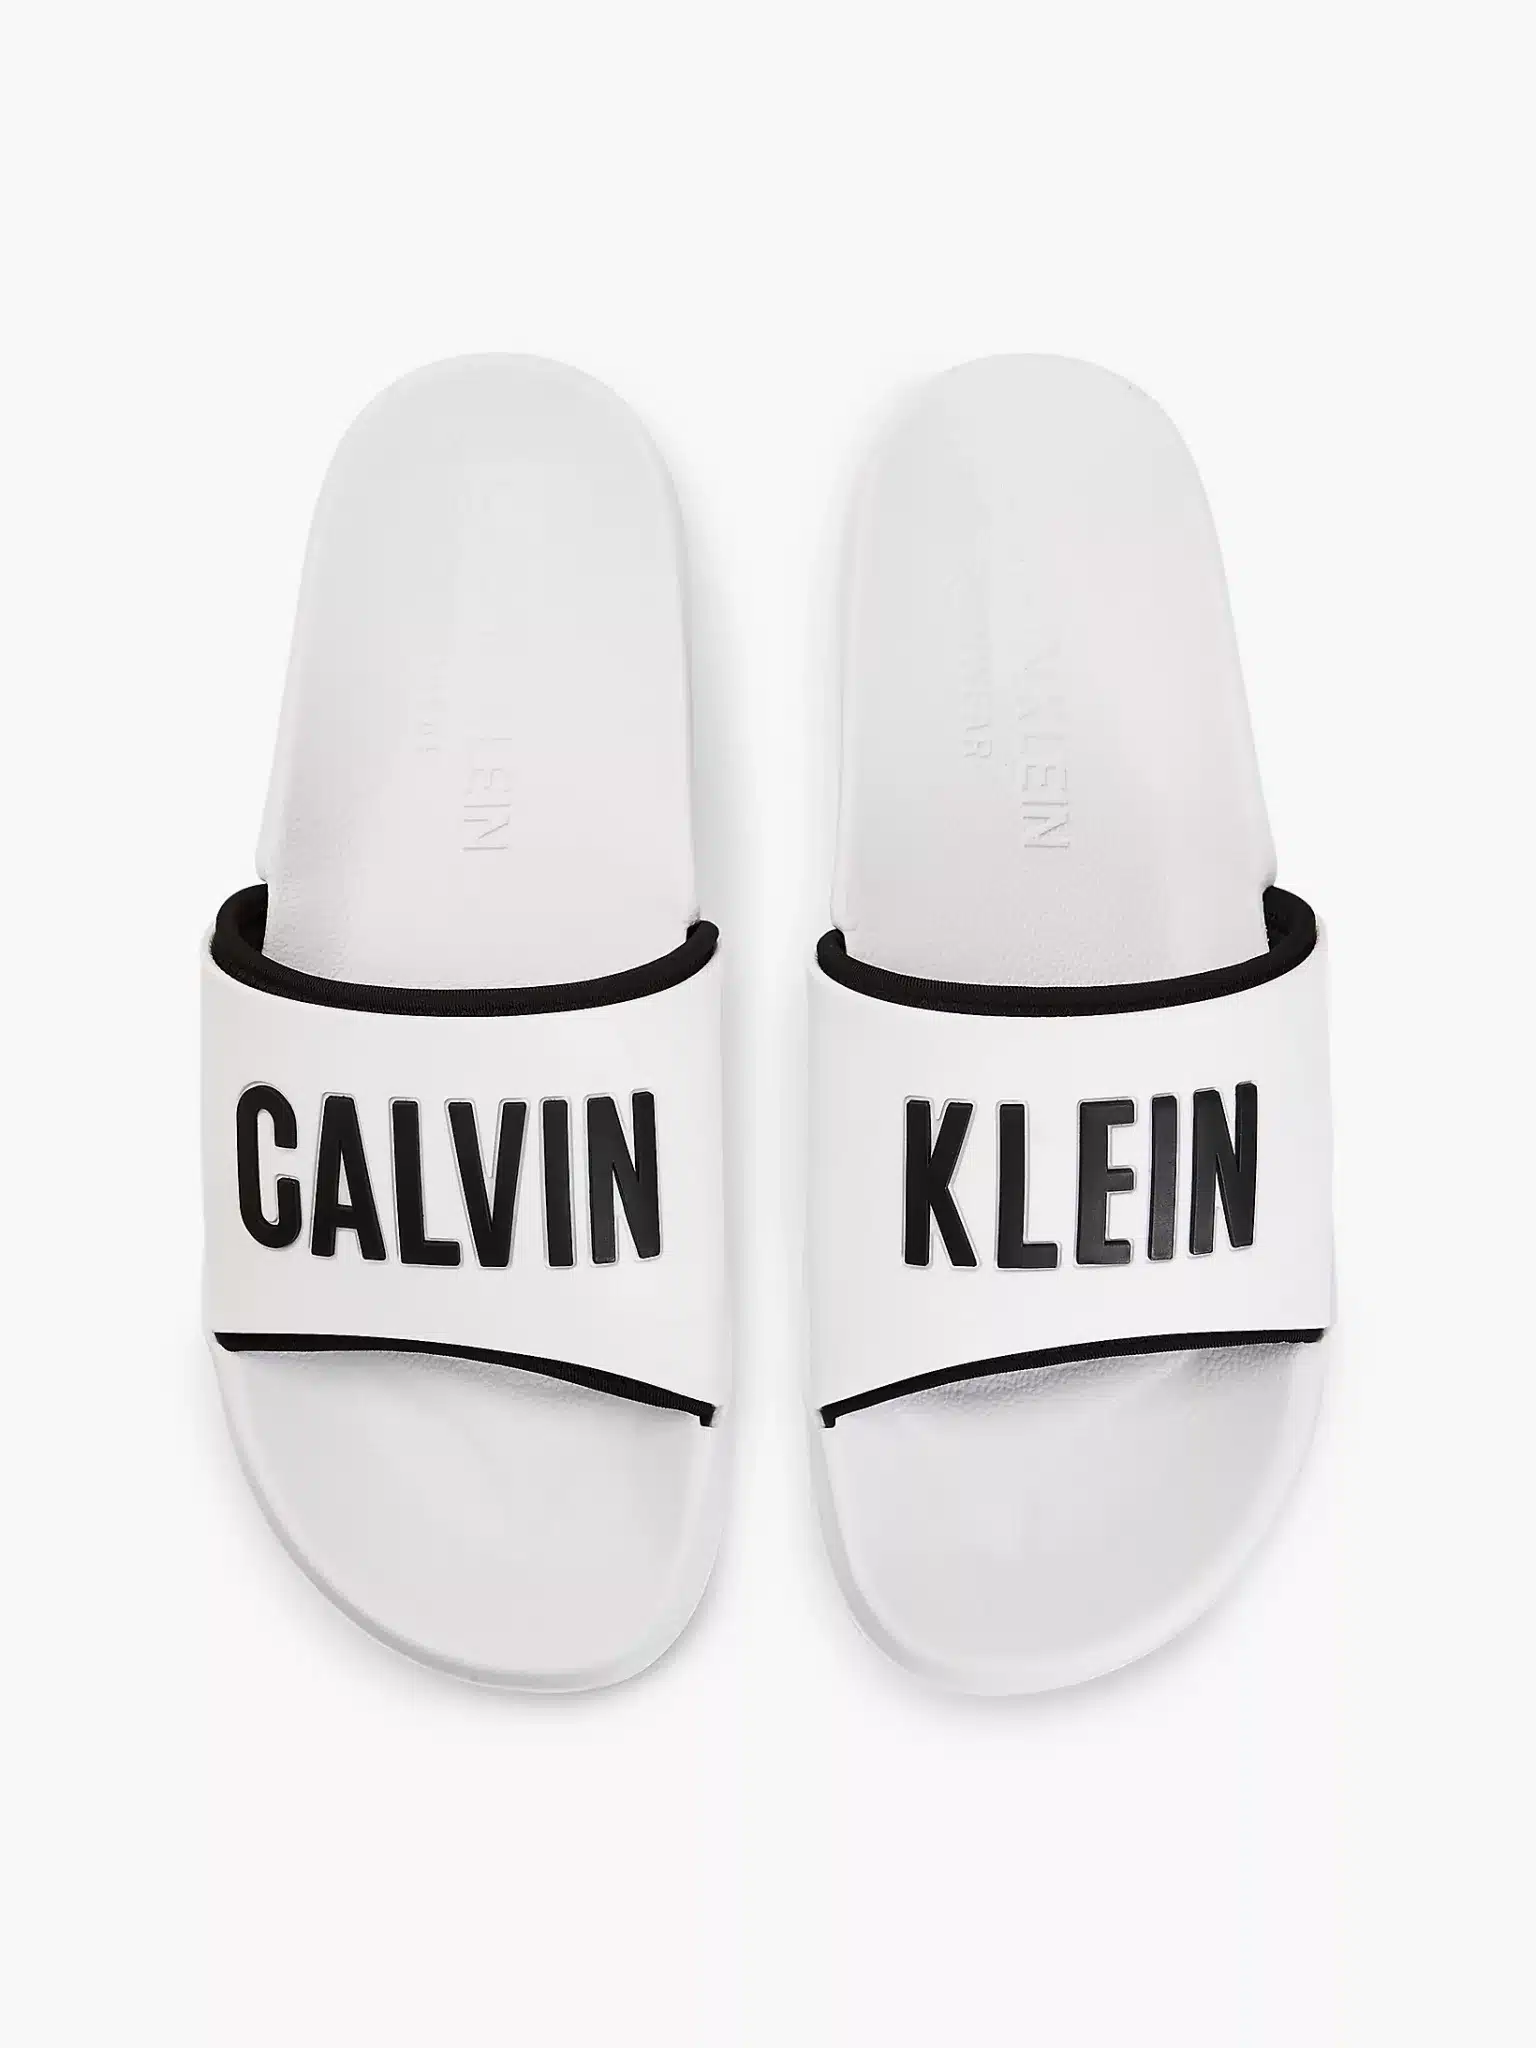 Buy Calvin Klein Sliders White - Scandinavian Fashion Store